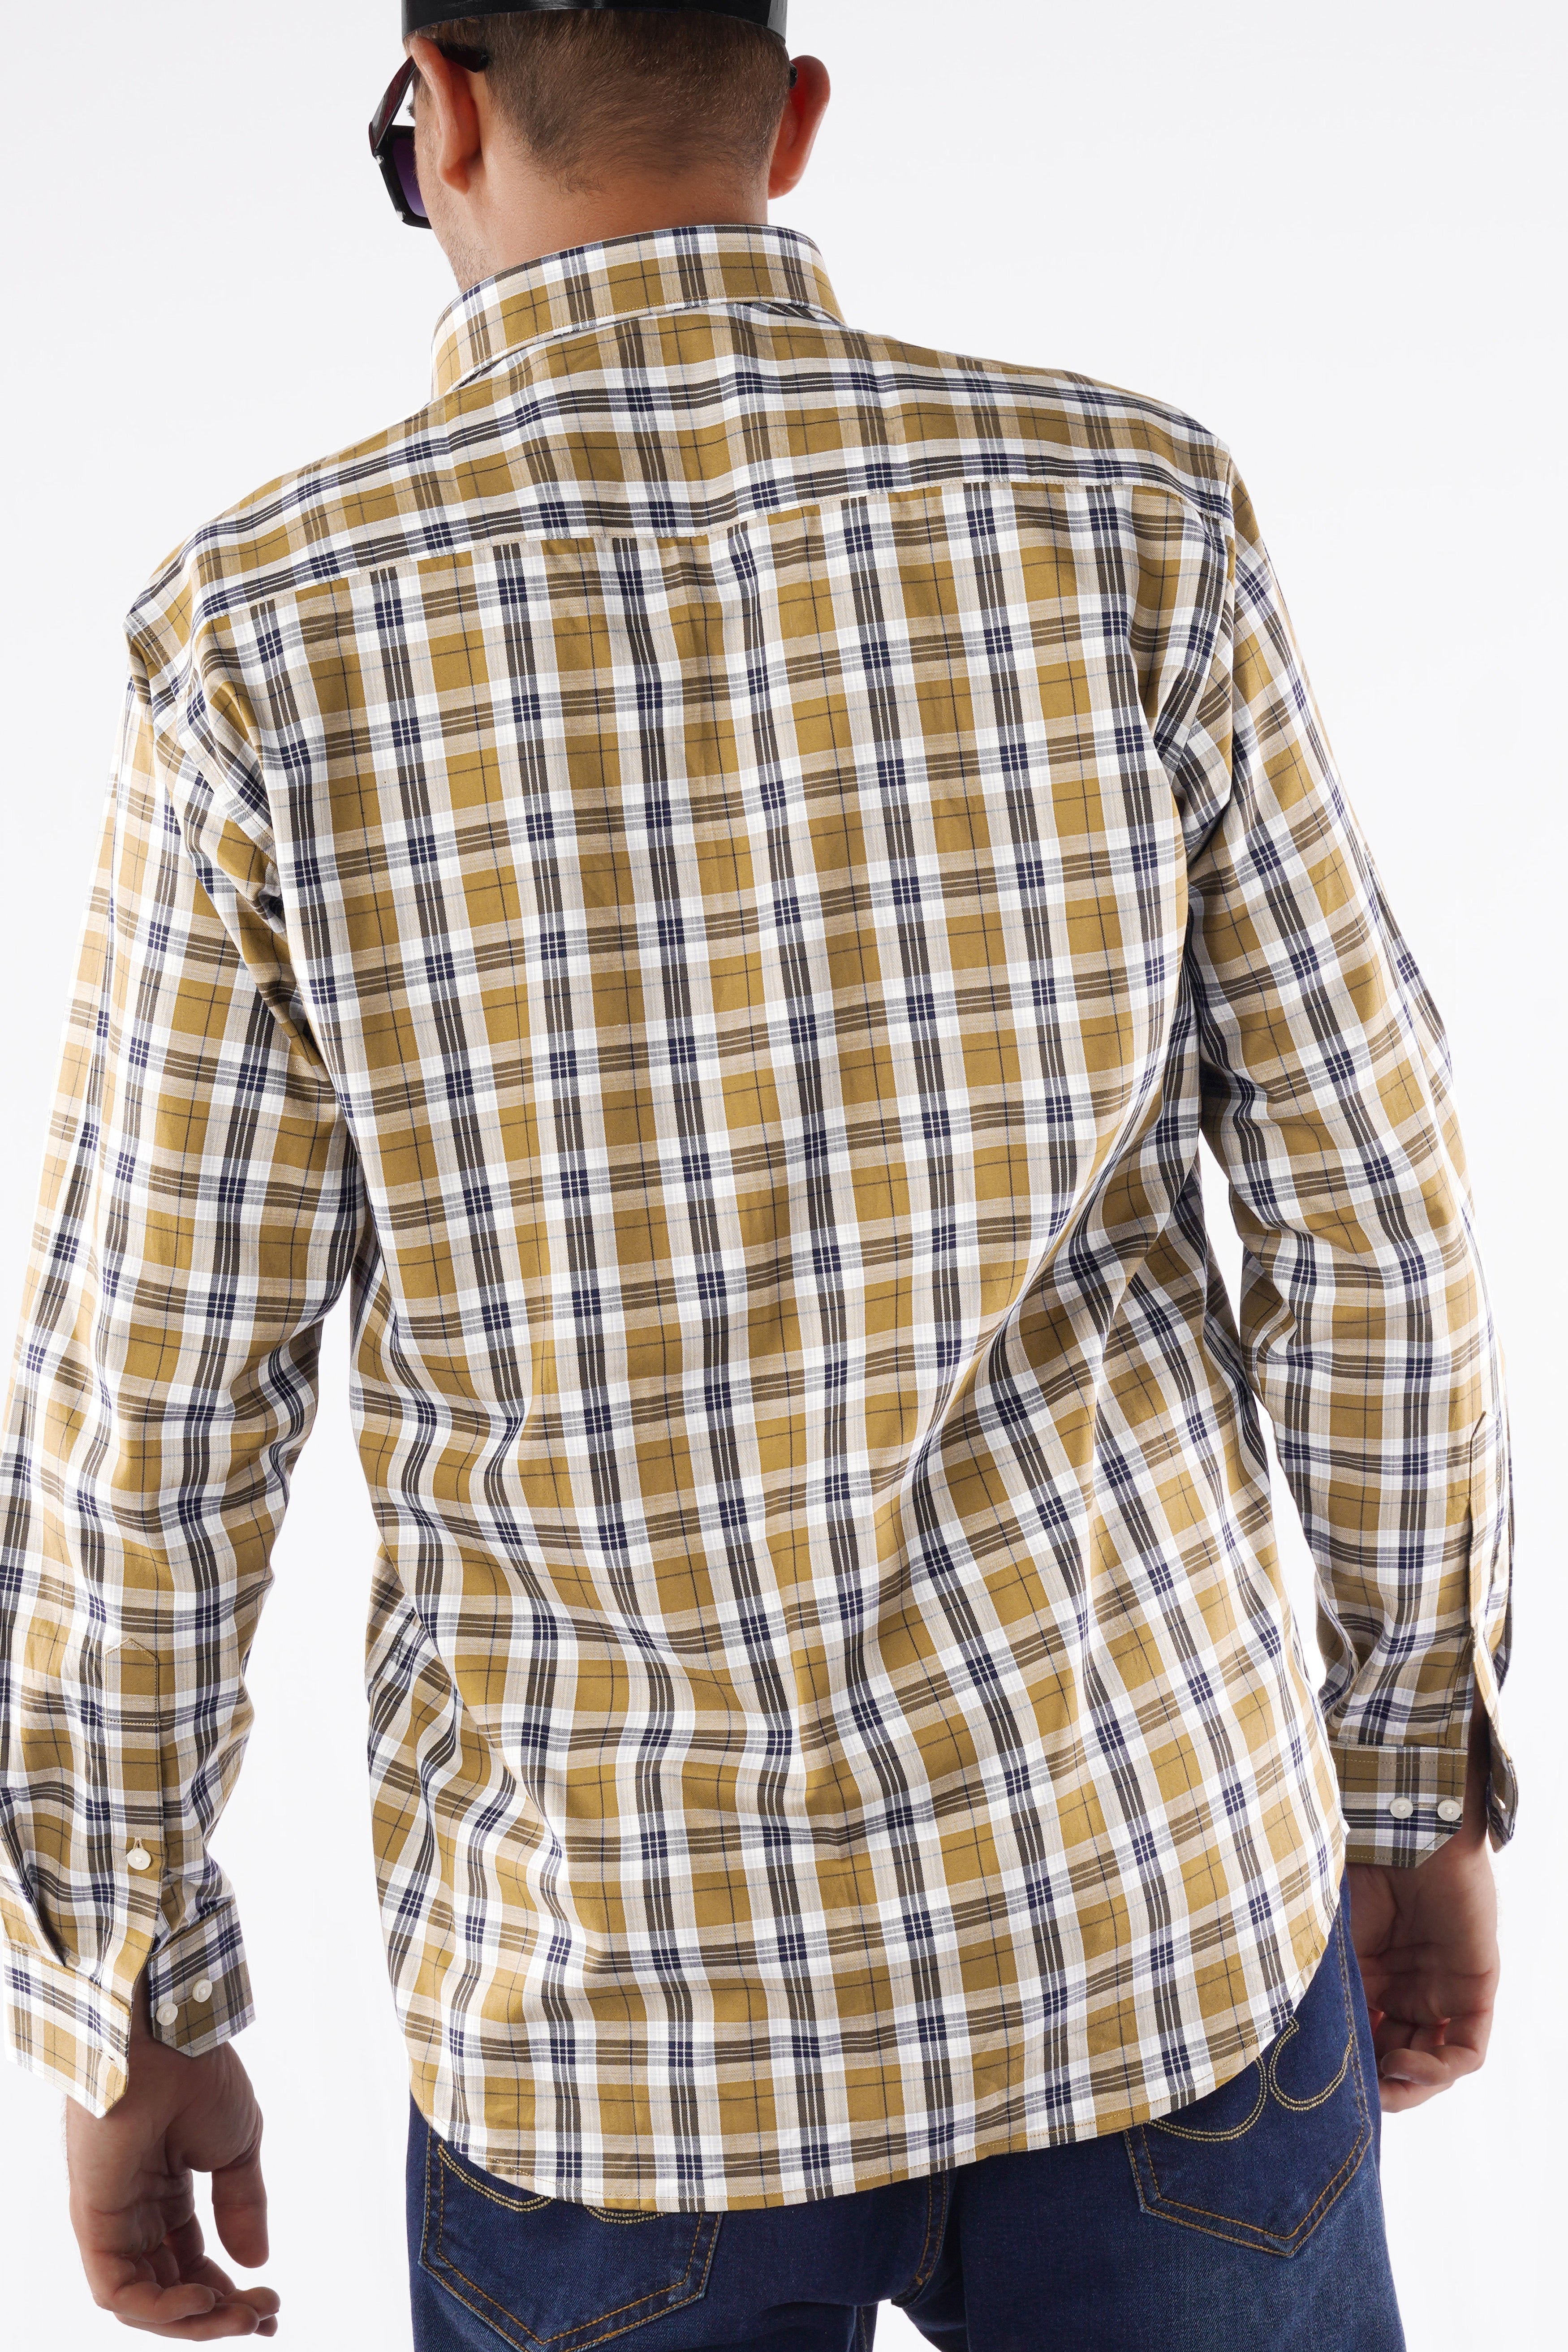 Driftwood Brown and Haiti Blue Twill Checkered Premium Cotton Shirt